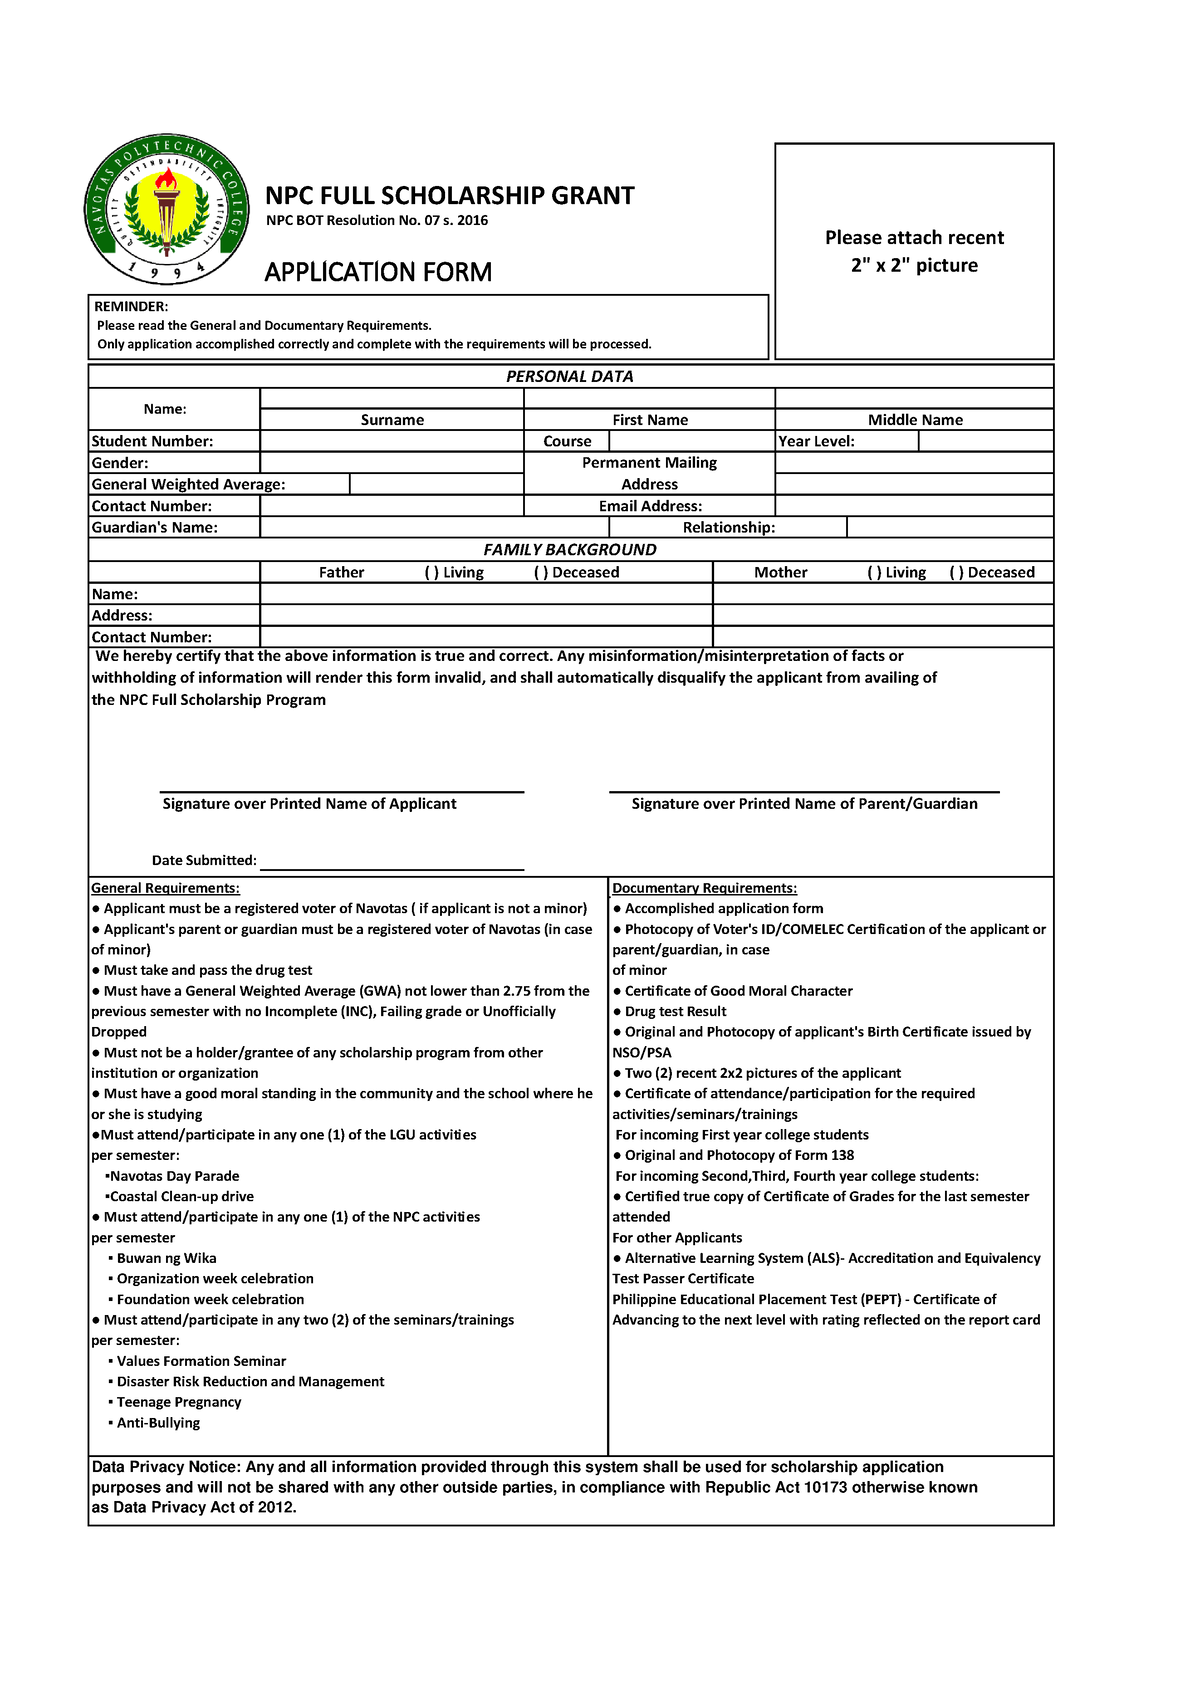 NPC FULL Scholarship Application FORM General Requirements Applicant